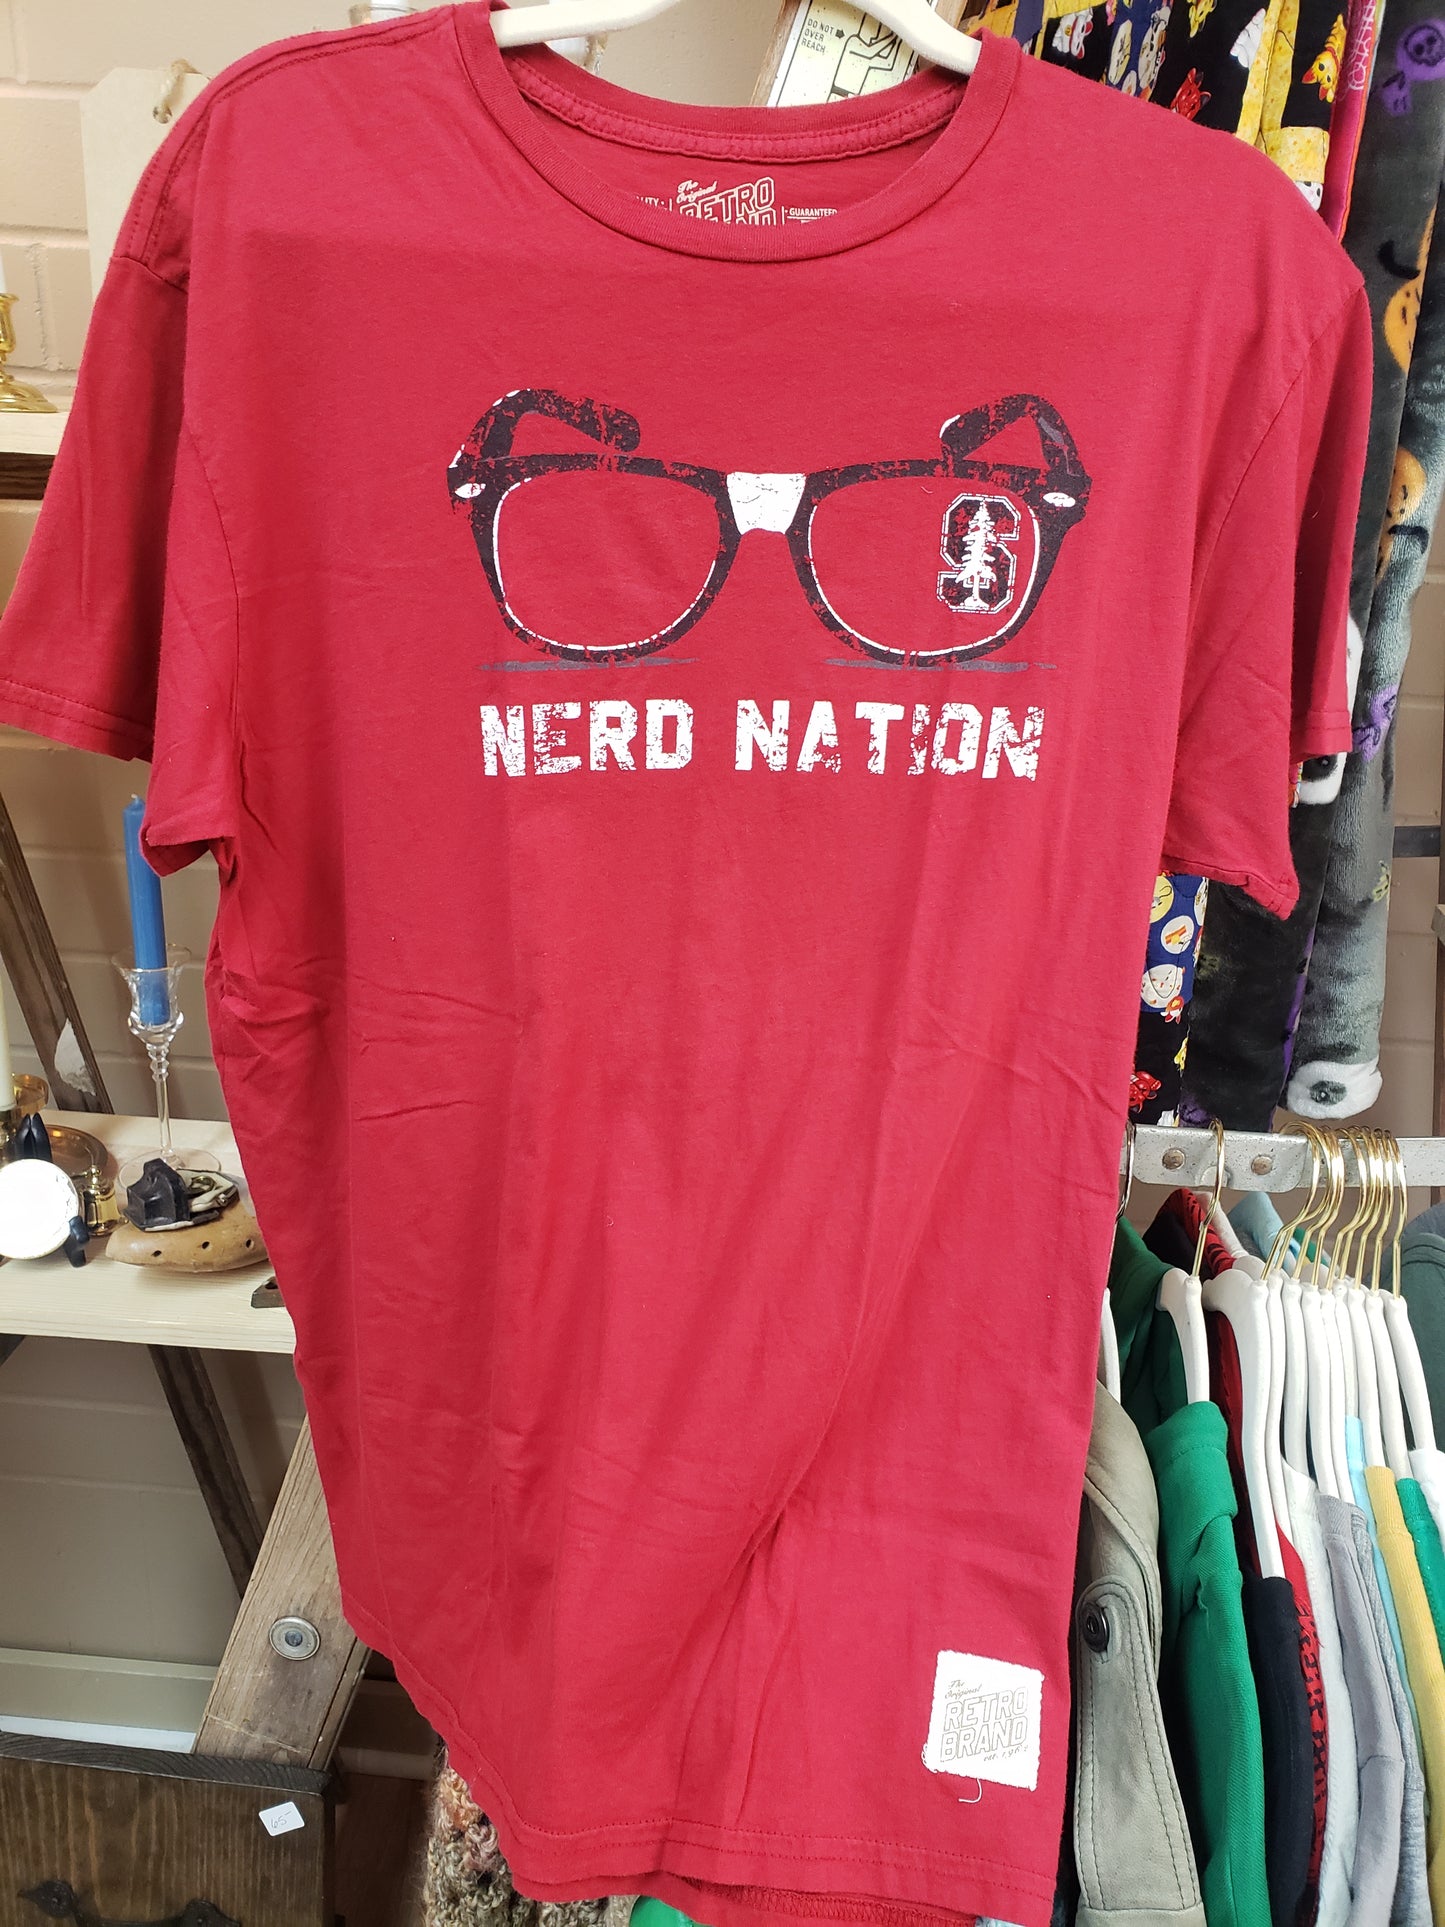 Red, short-sleeved T-shirt - "Nerd Nation"